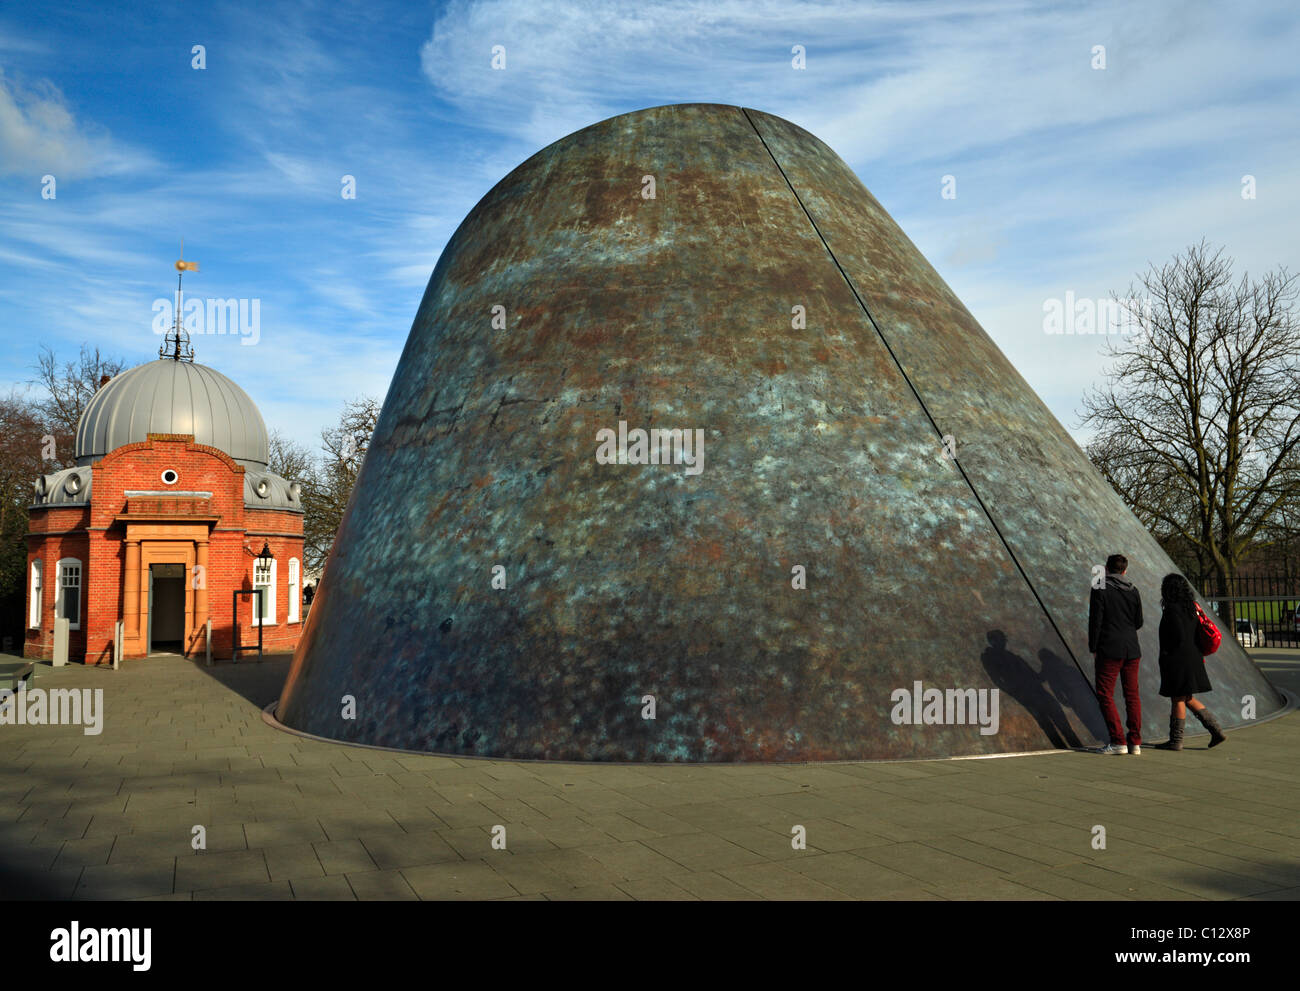 El Observatorio Real de Peter Harrison planetarium, Greenwich, Londres. Foto de stock